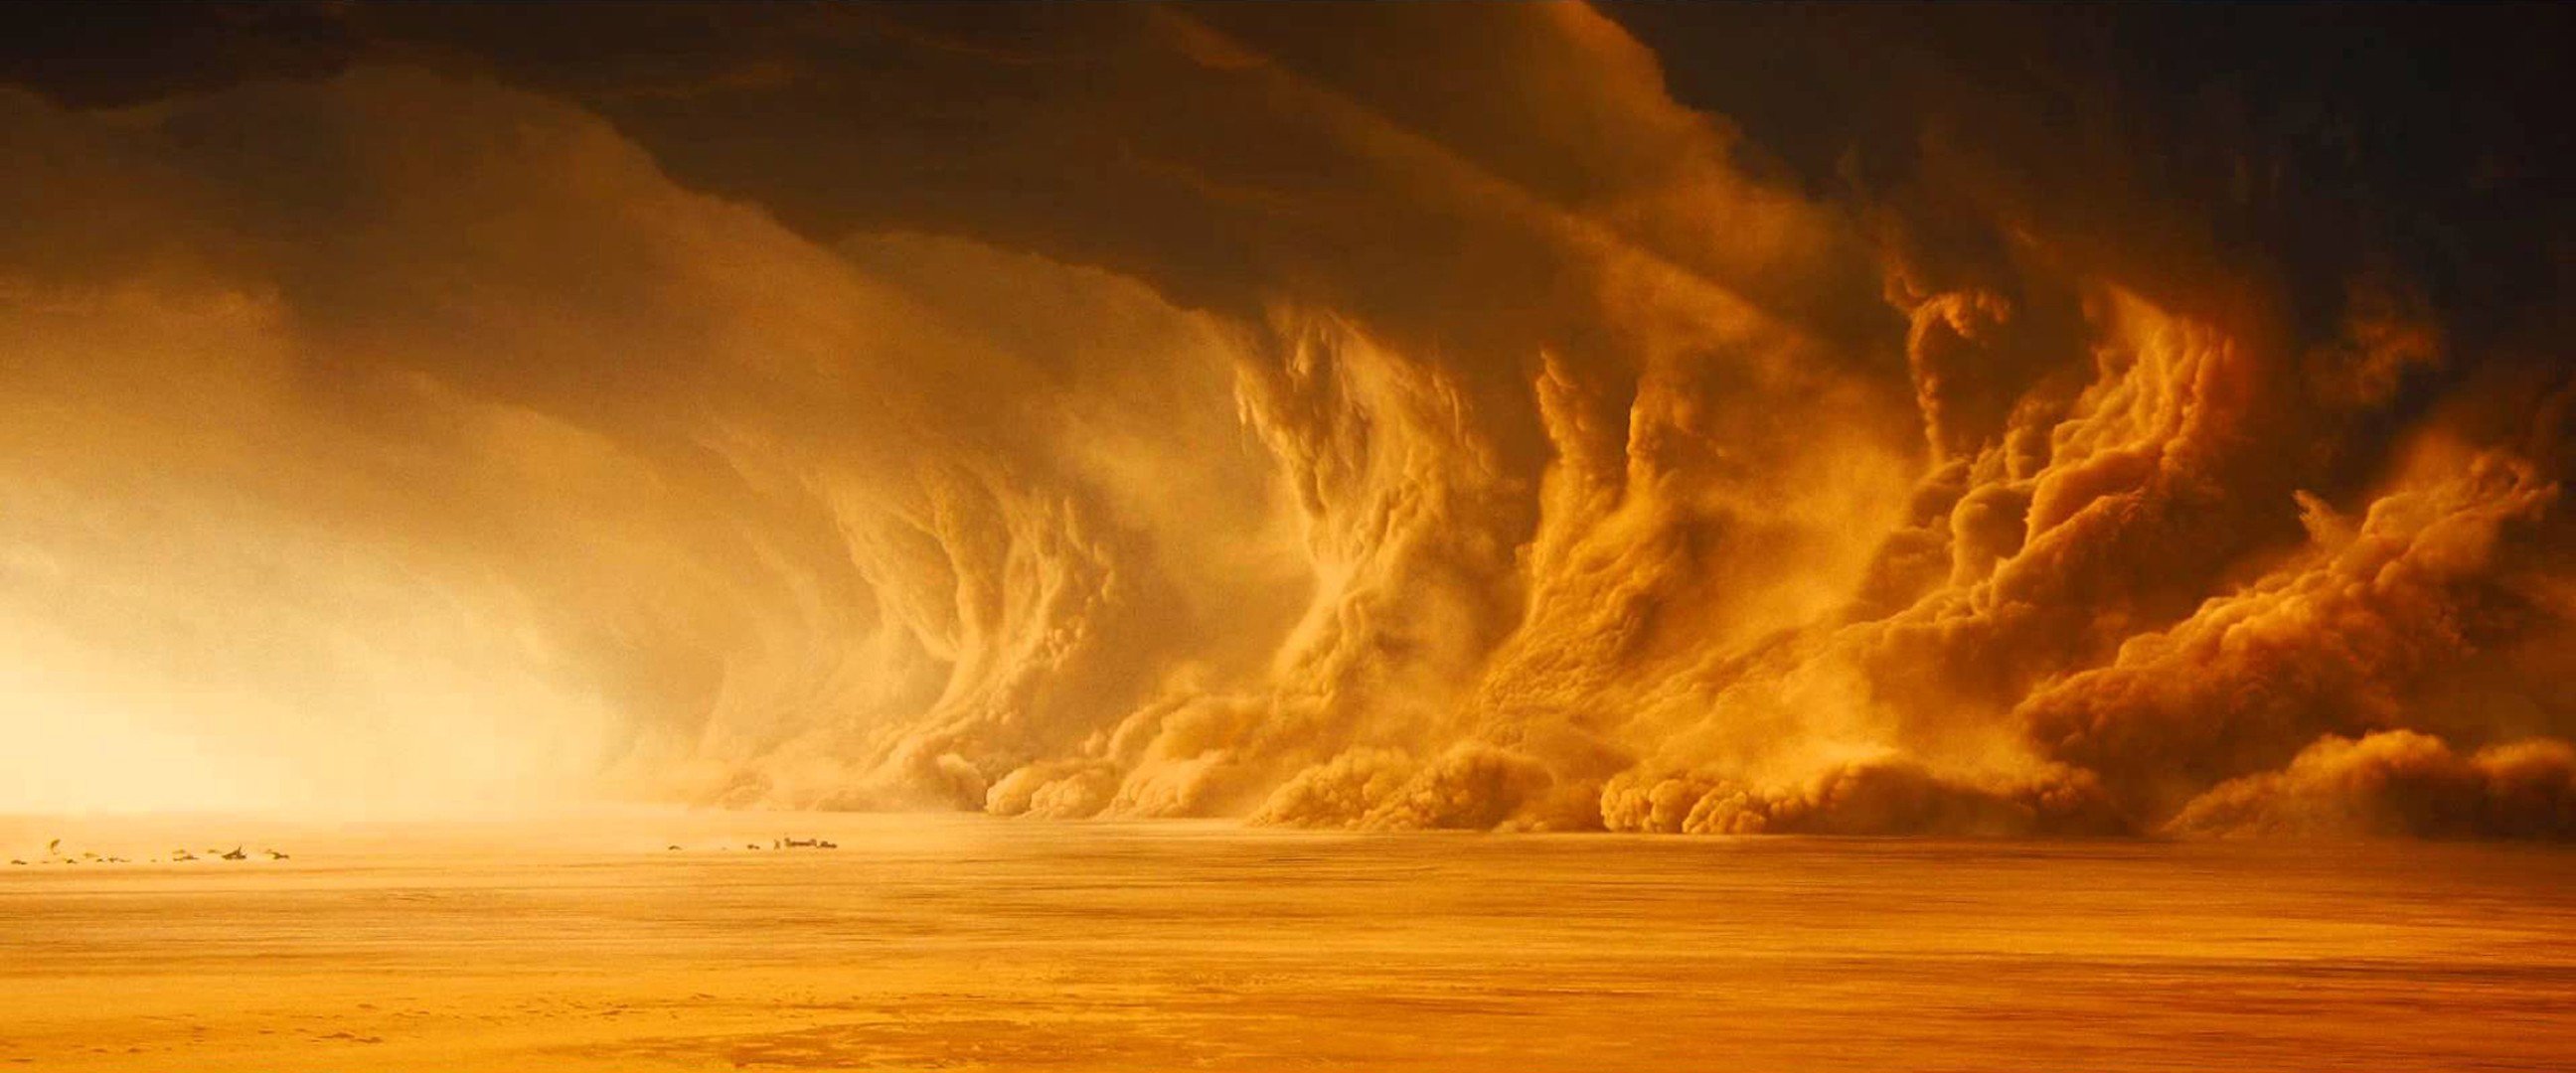 Sandstorms Mad Max Fury Road Wallpaper HD Desktop And Mobile